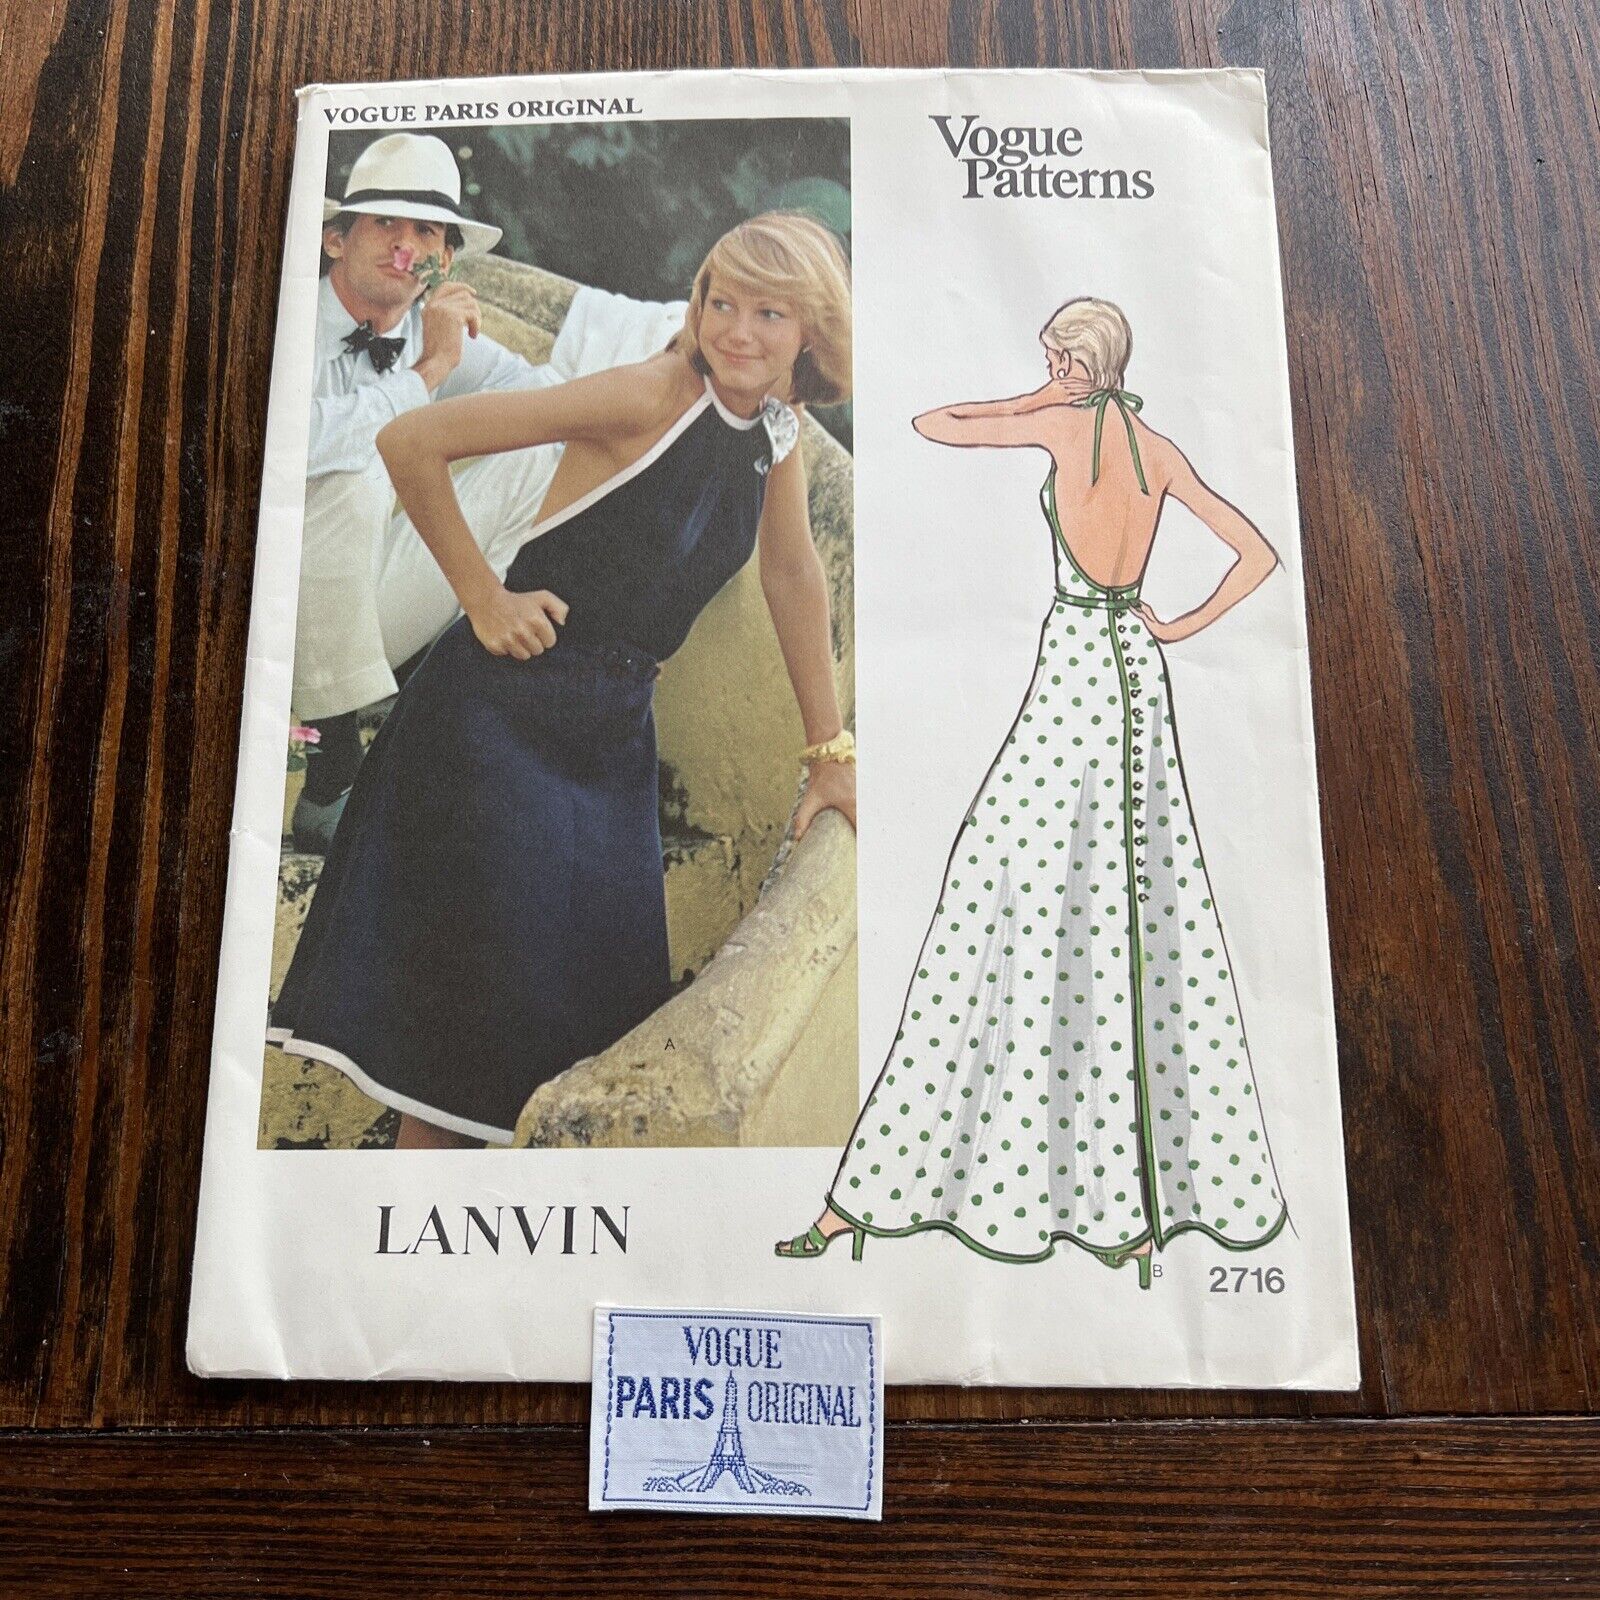 Vogue Paris Original Vintage 70’s Dress Sewing Pattern Lanvin #2716 14/36b